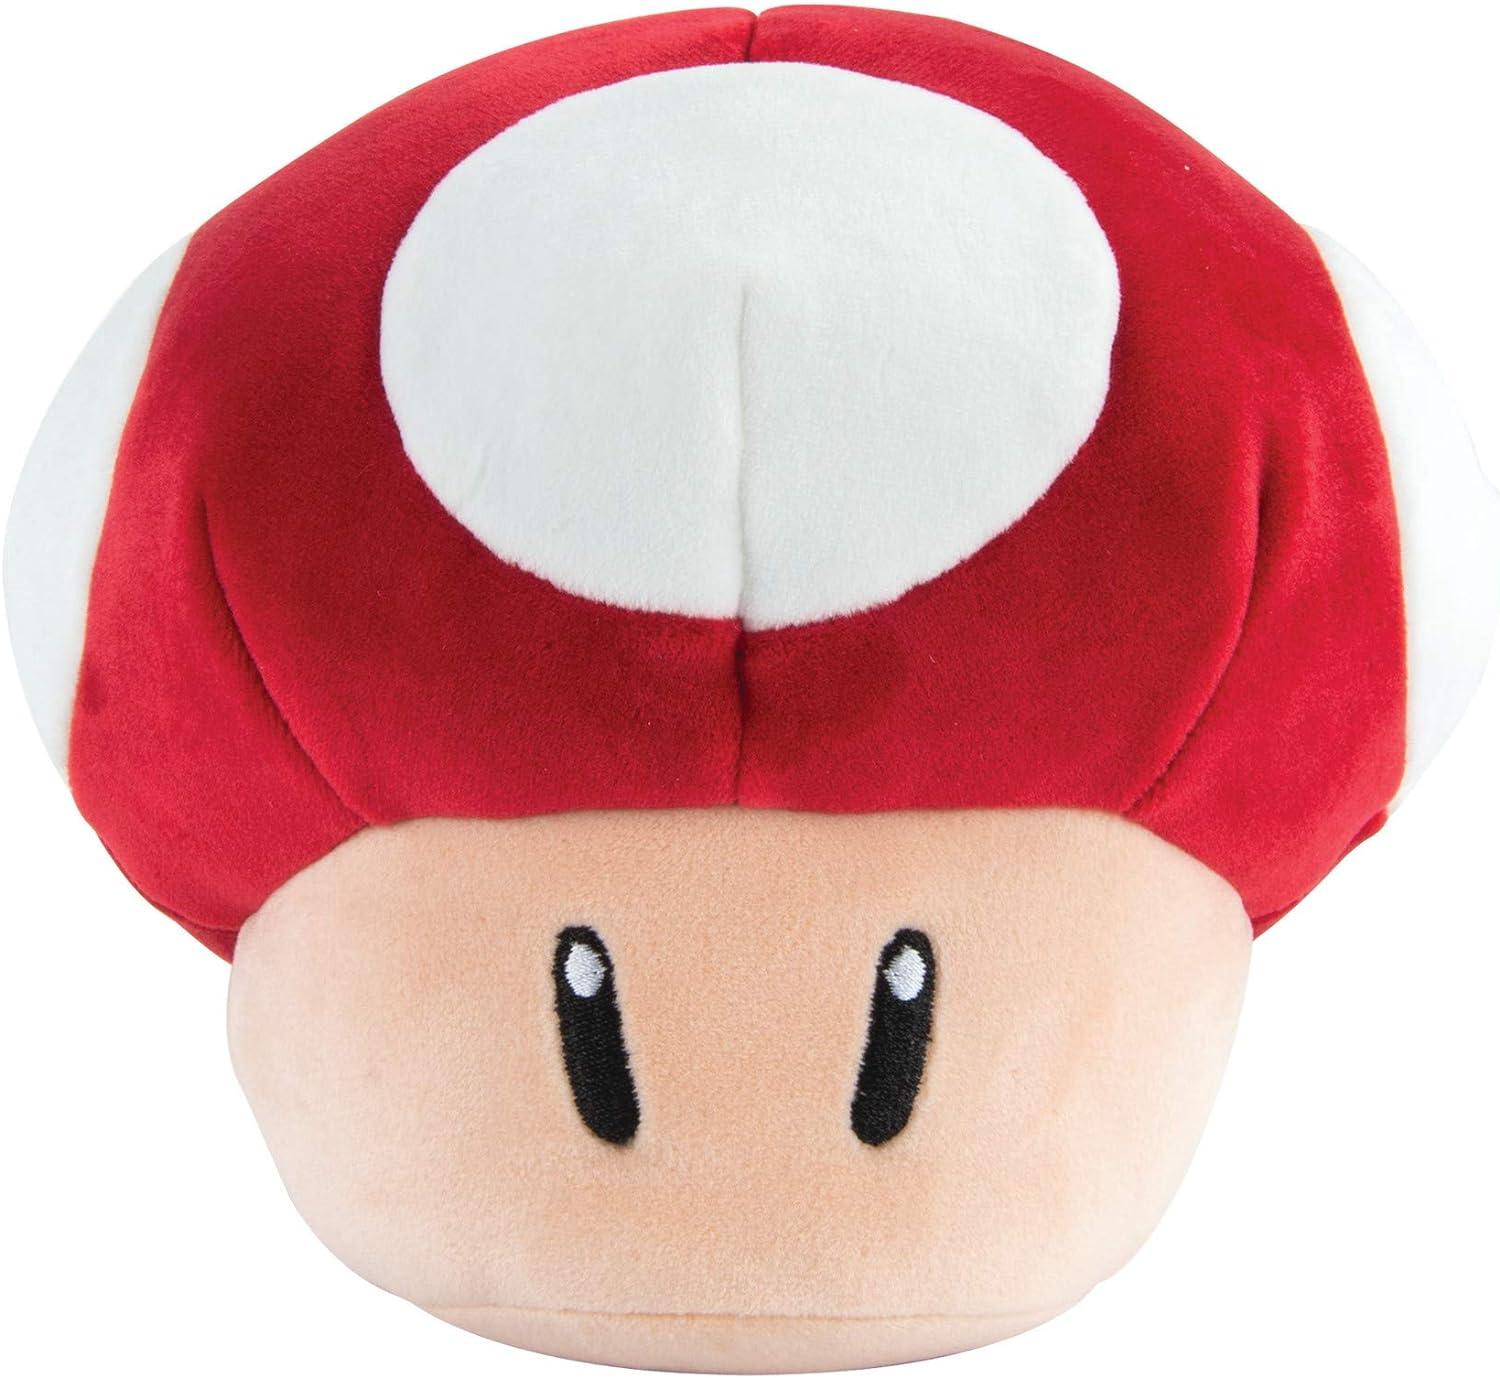 Club Mocchi Mocchi Nintendo Super Mario Mushroom Plush for $5.99